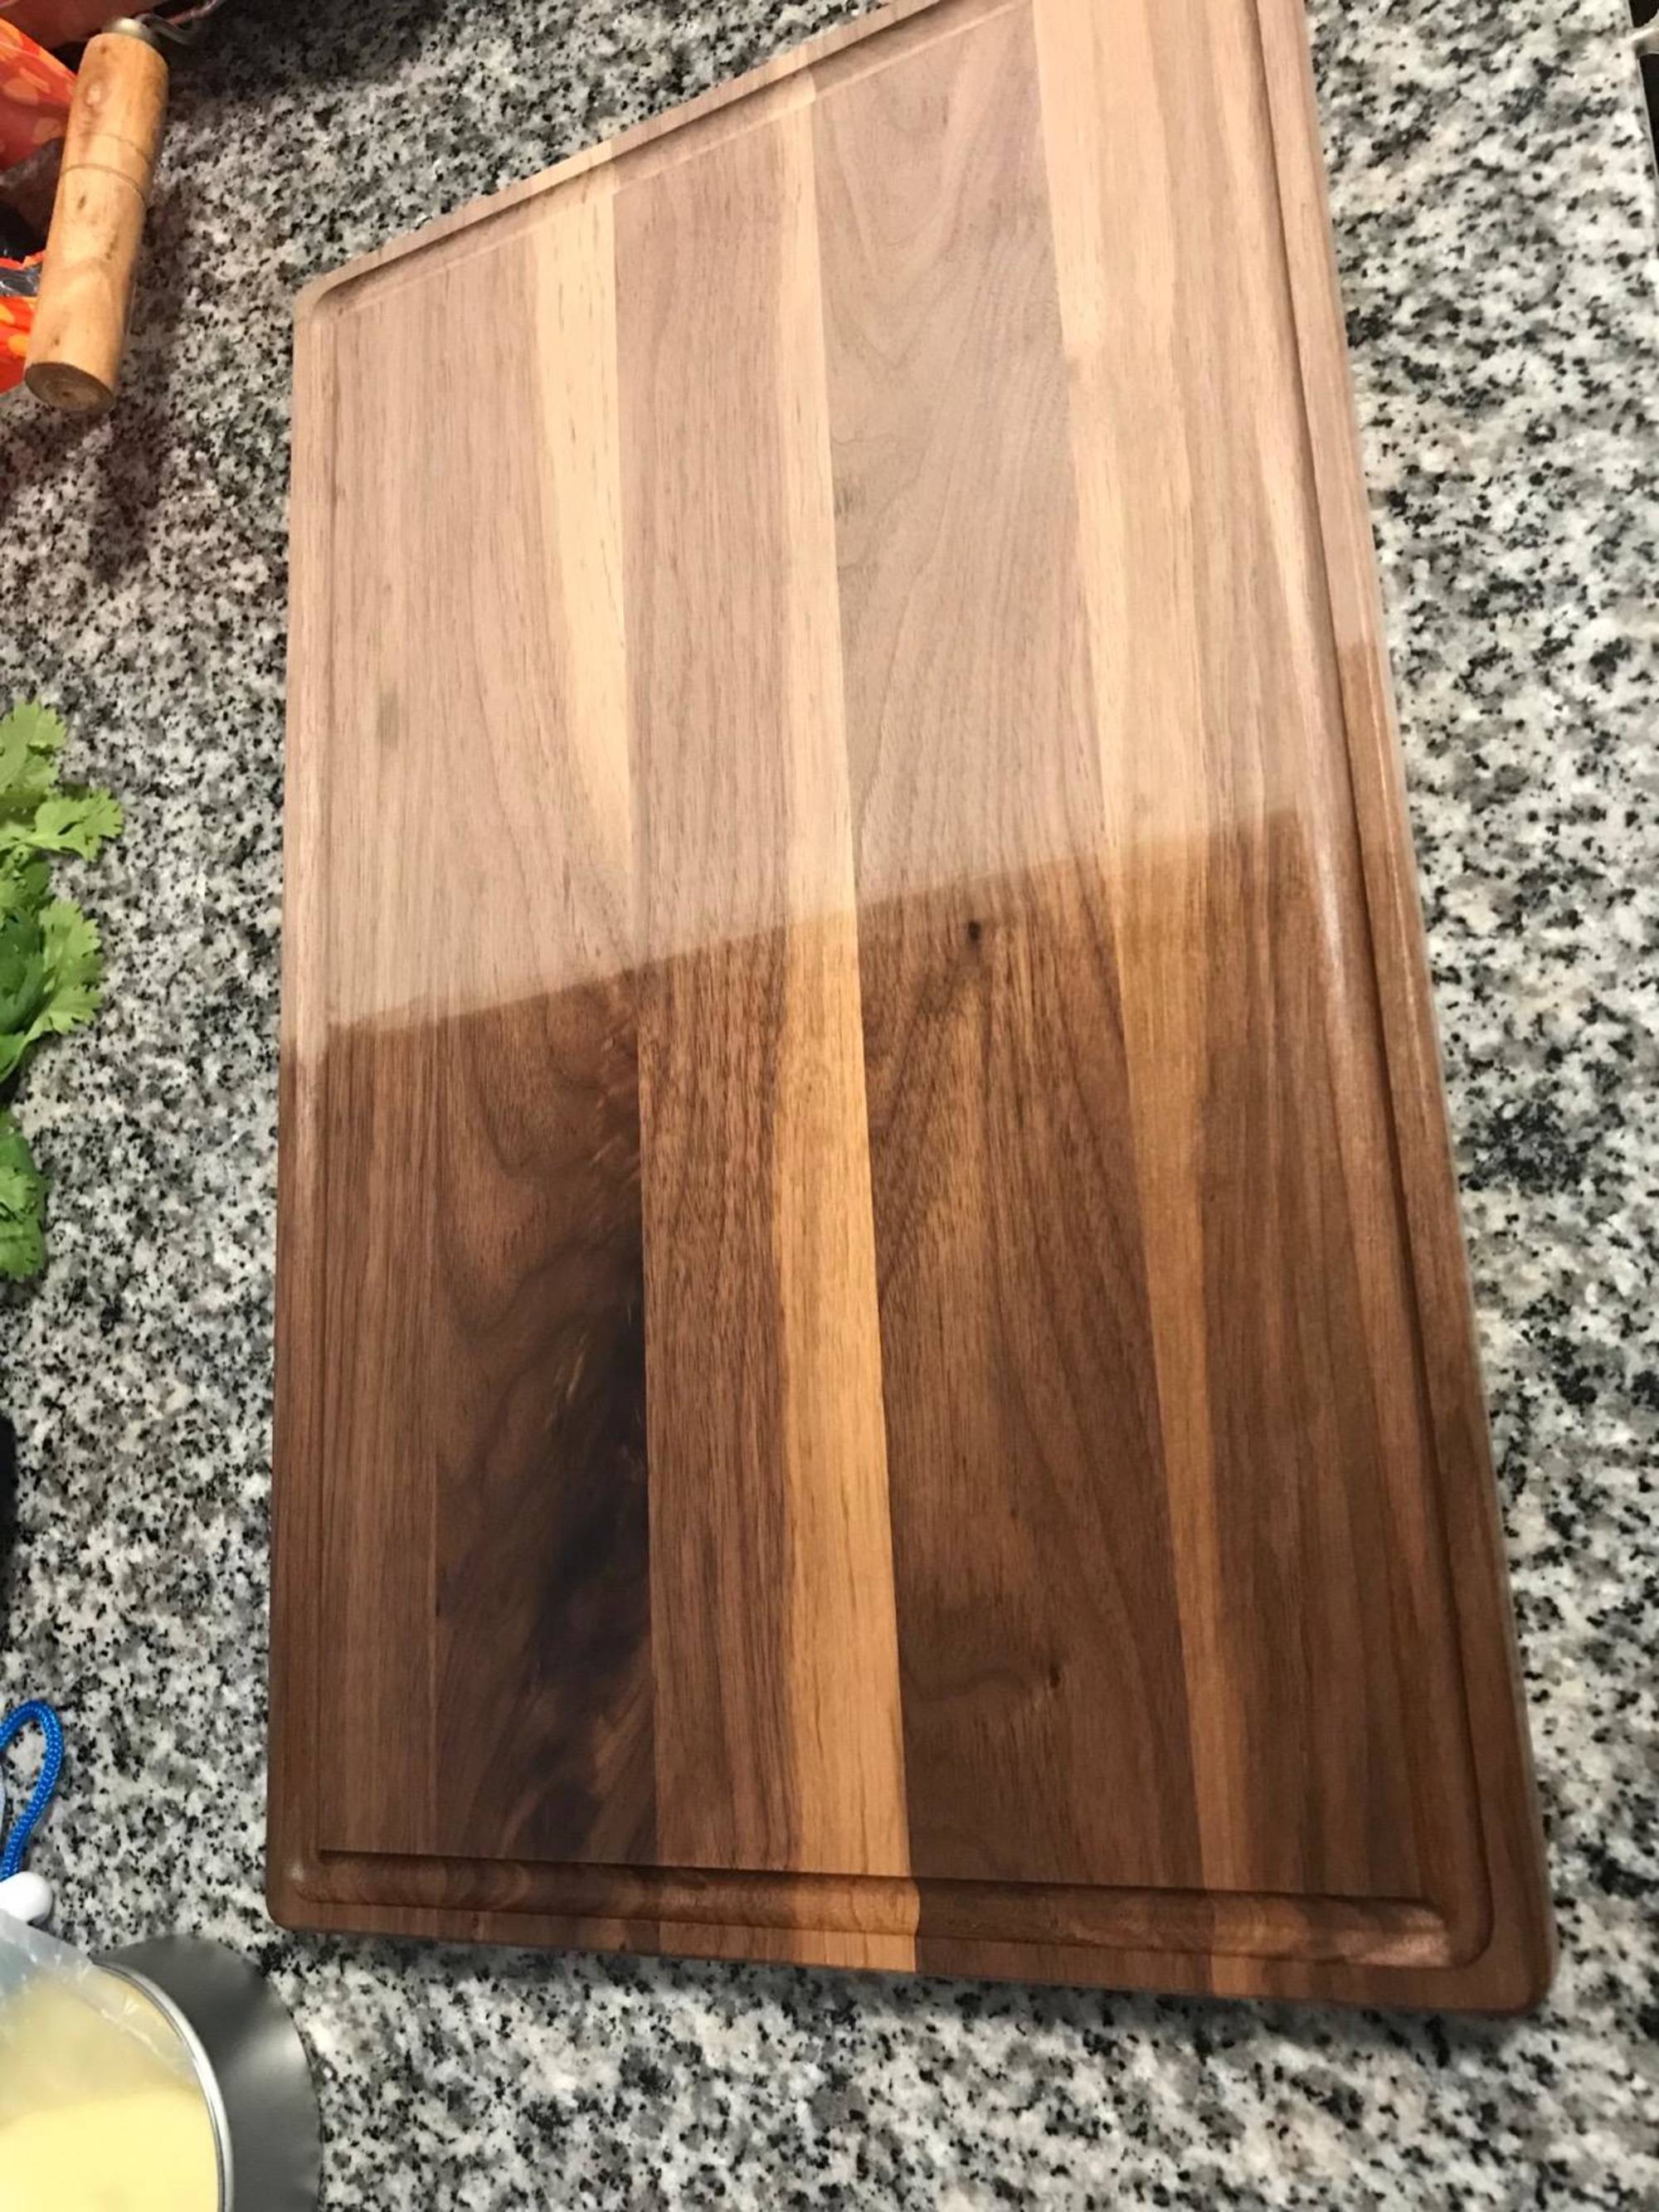 16x11x1.75 One Solid Piece Walnut Cutting Board No Glue, No Joints Handmade  Gift 